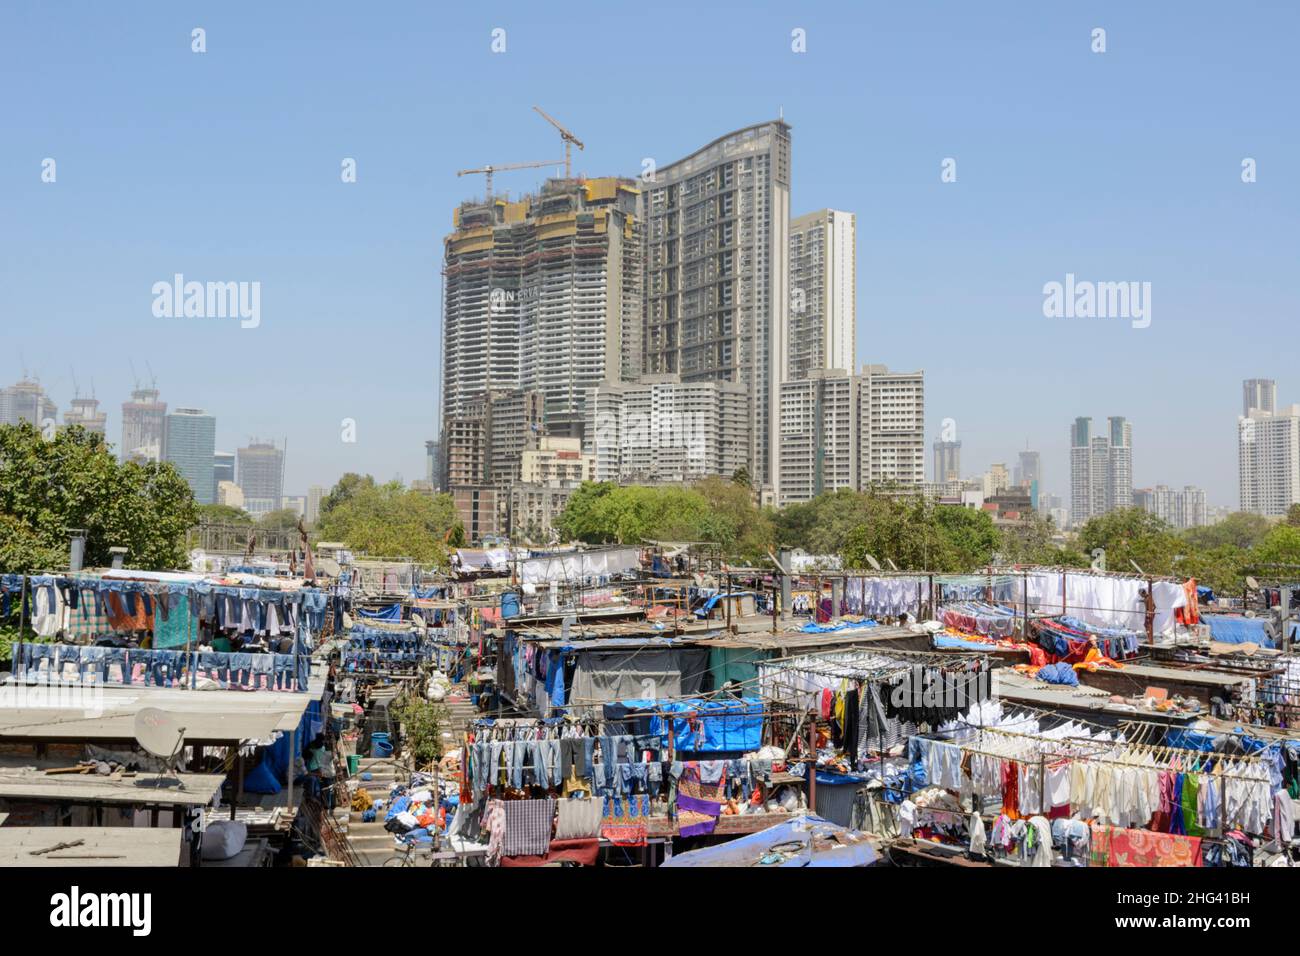 View of modern Mumbai City skyscrapers next to the traditional Mahalaxmi Dhobi Ghat, the largest outdoor laundry in Mumbai, Maharashtra, India Stock Photo